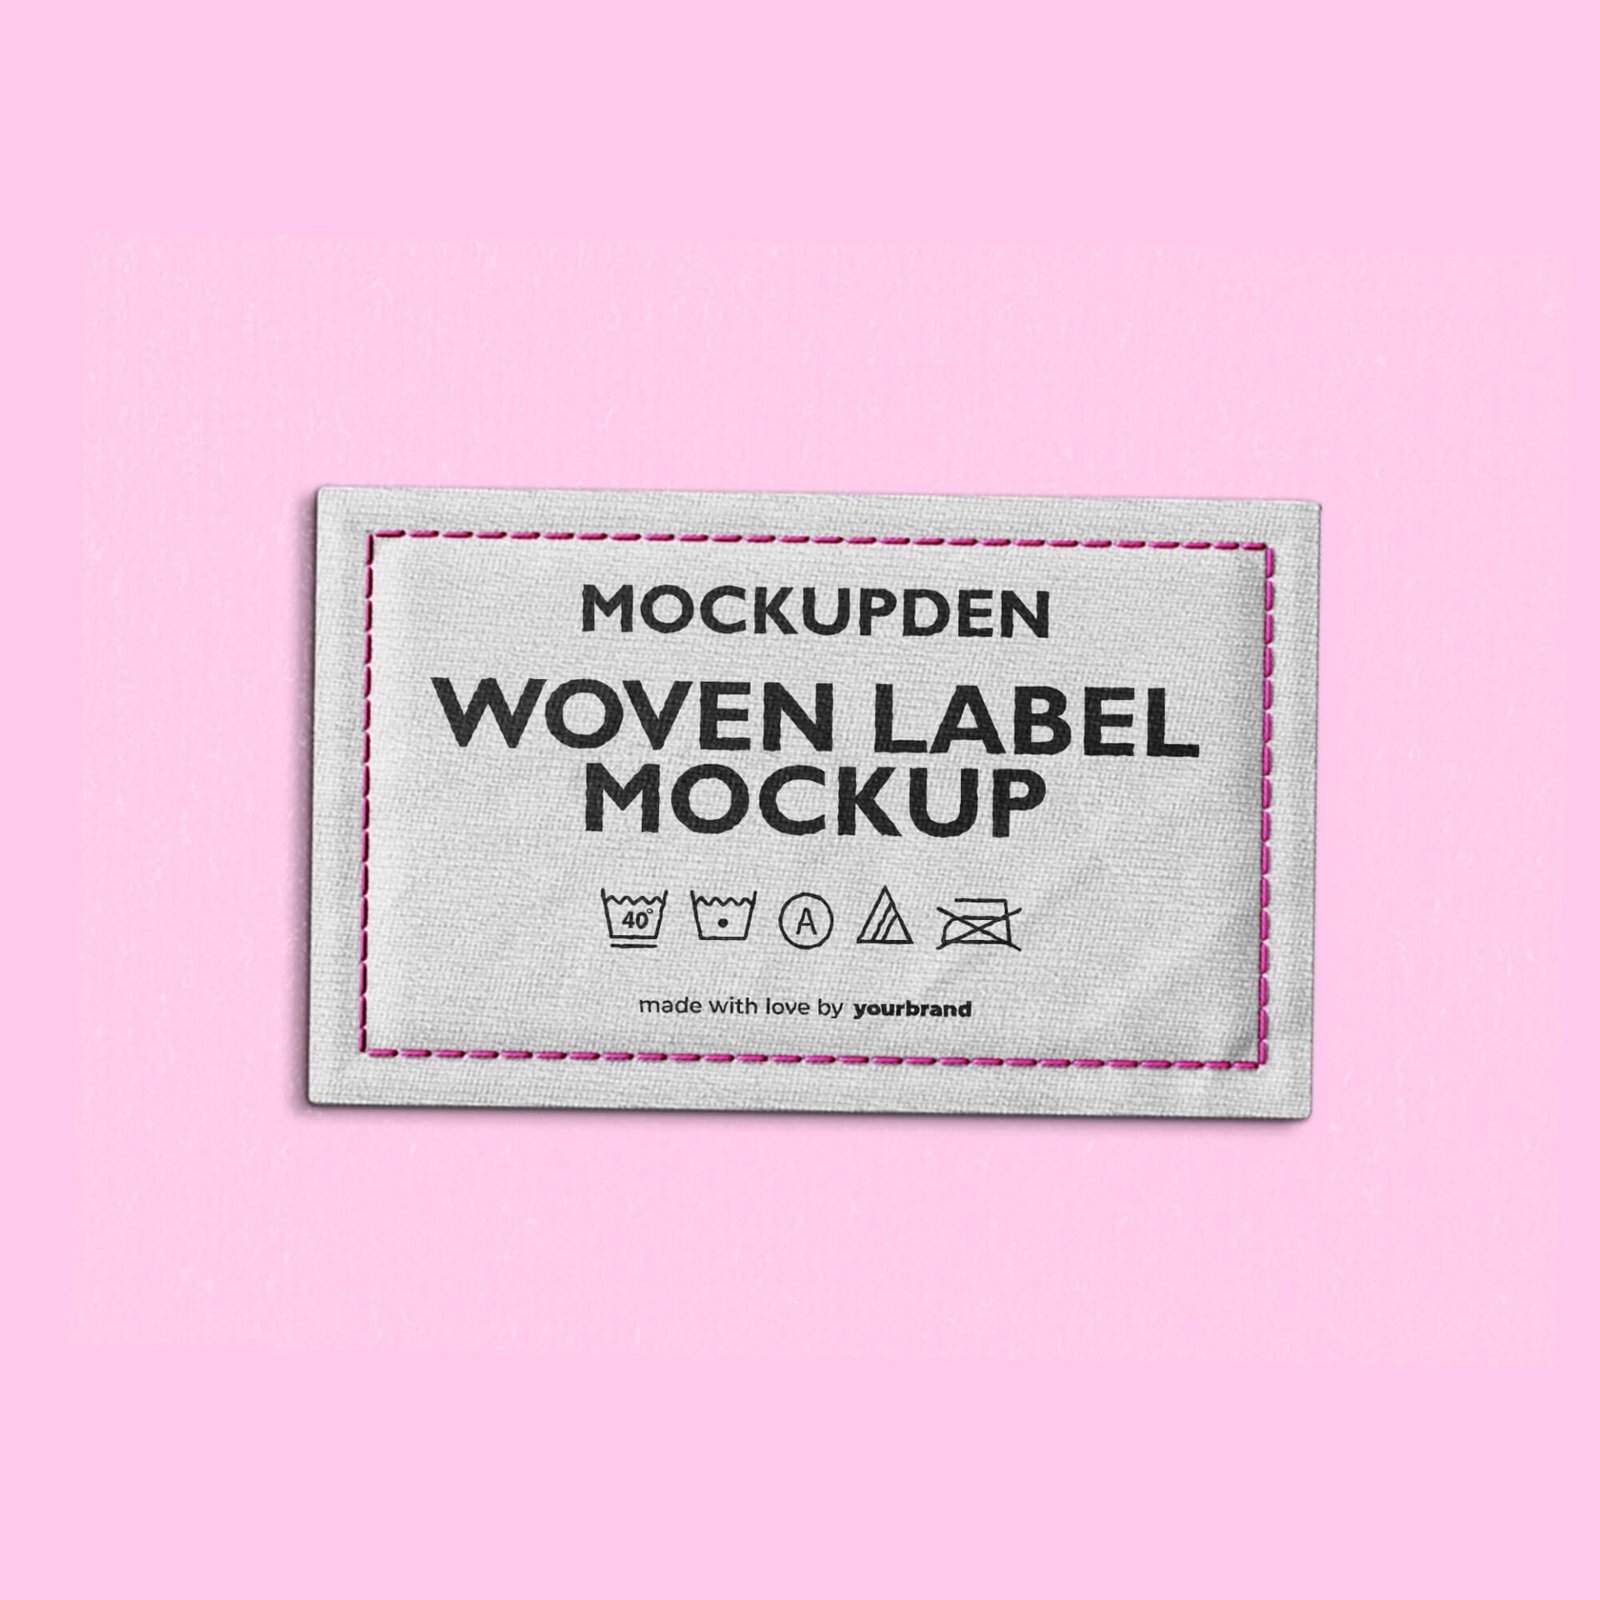 Free Woven Label Mockup PSD Template - Mockup Den